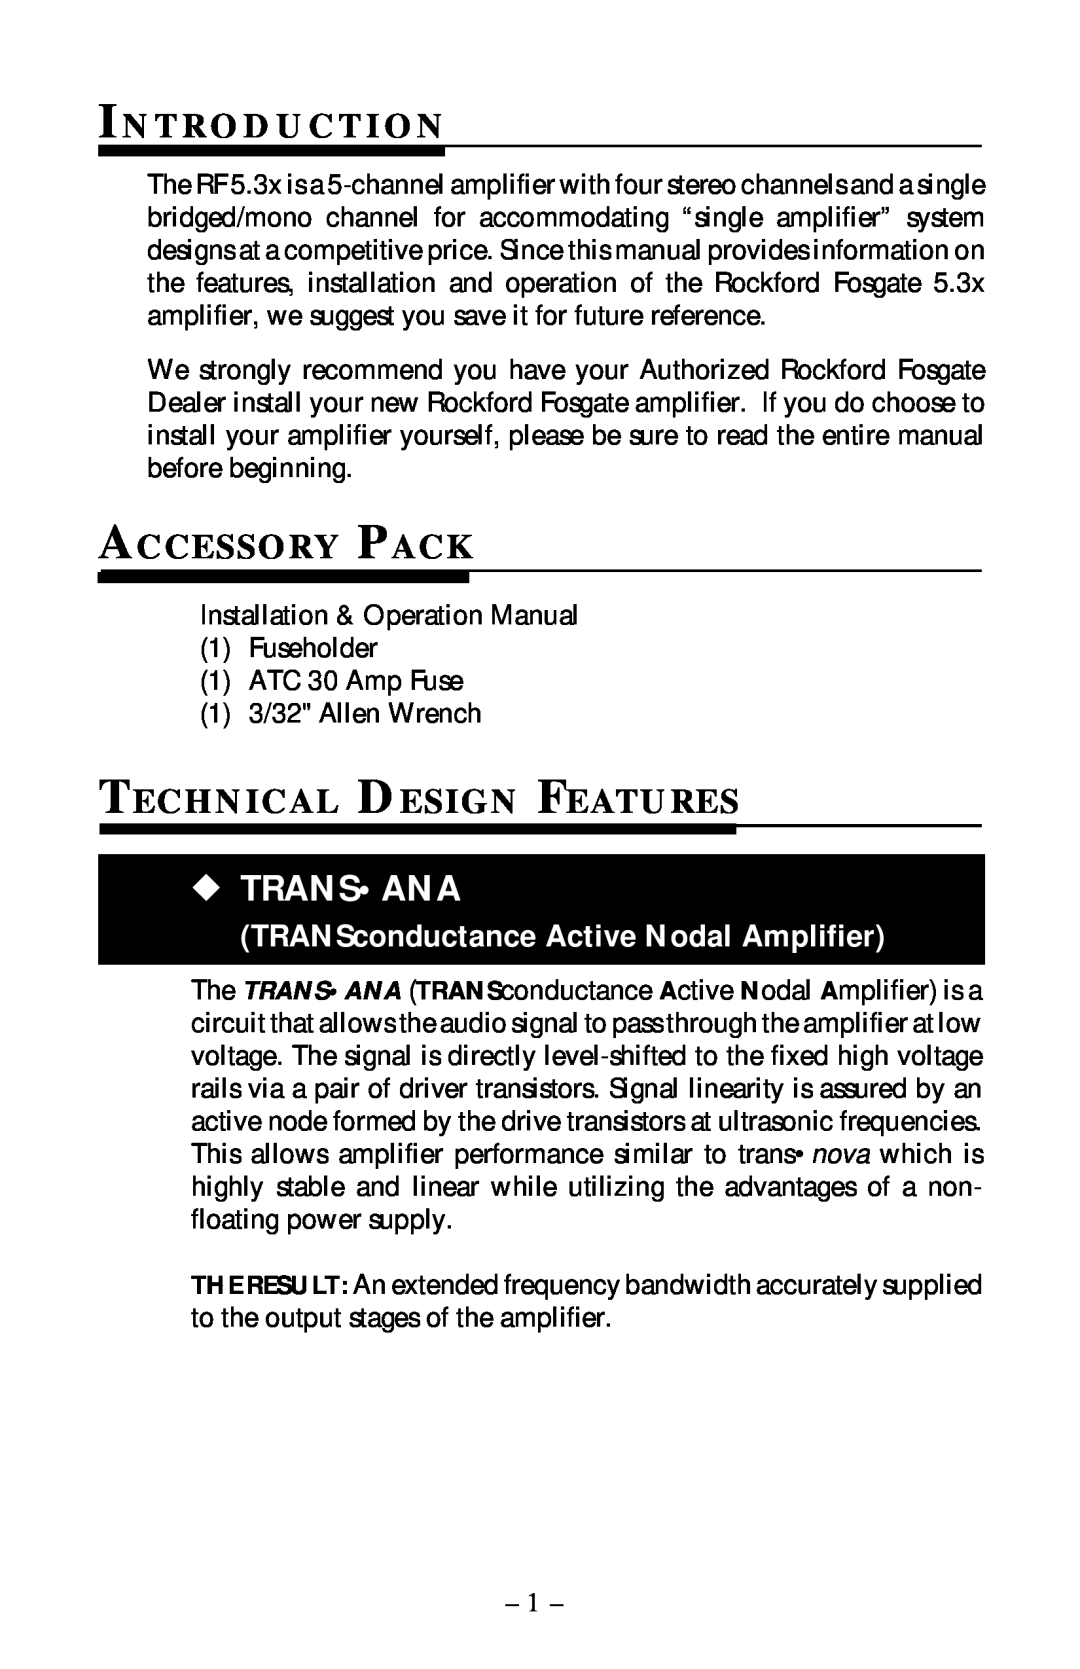 Rockford Fosgate 5.3x manual Trans Ana, In T R O D U C T I O N, Accessory Pack, Technical Design Features 